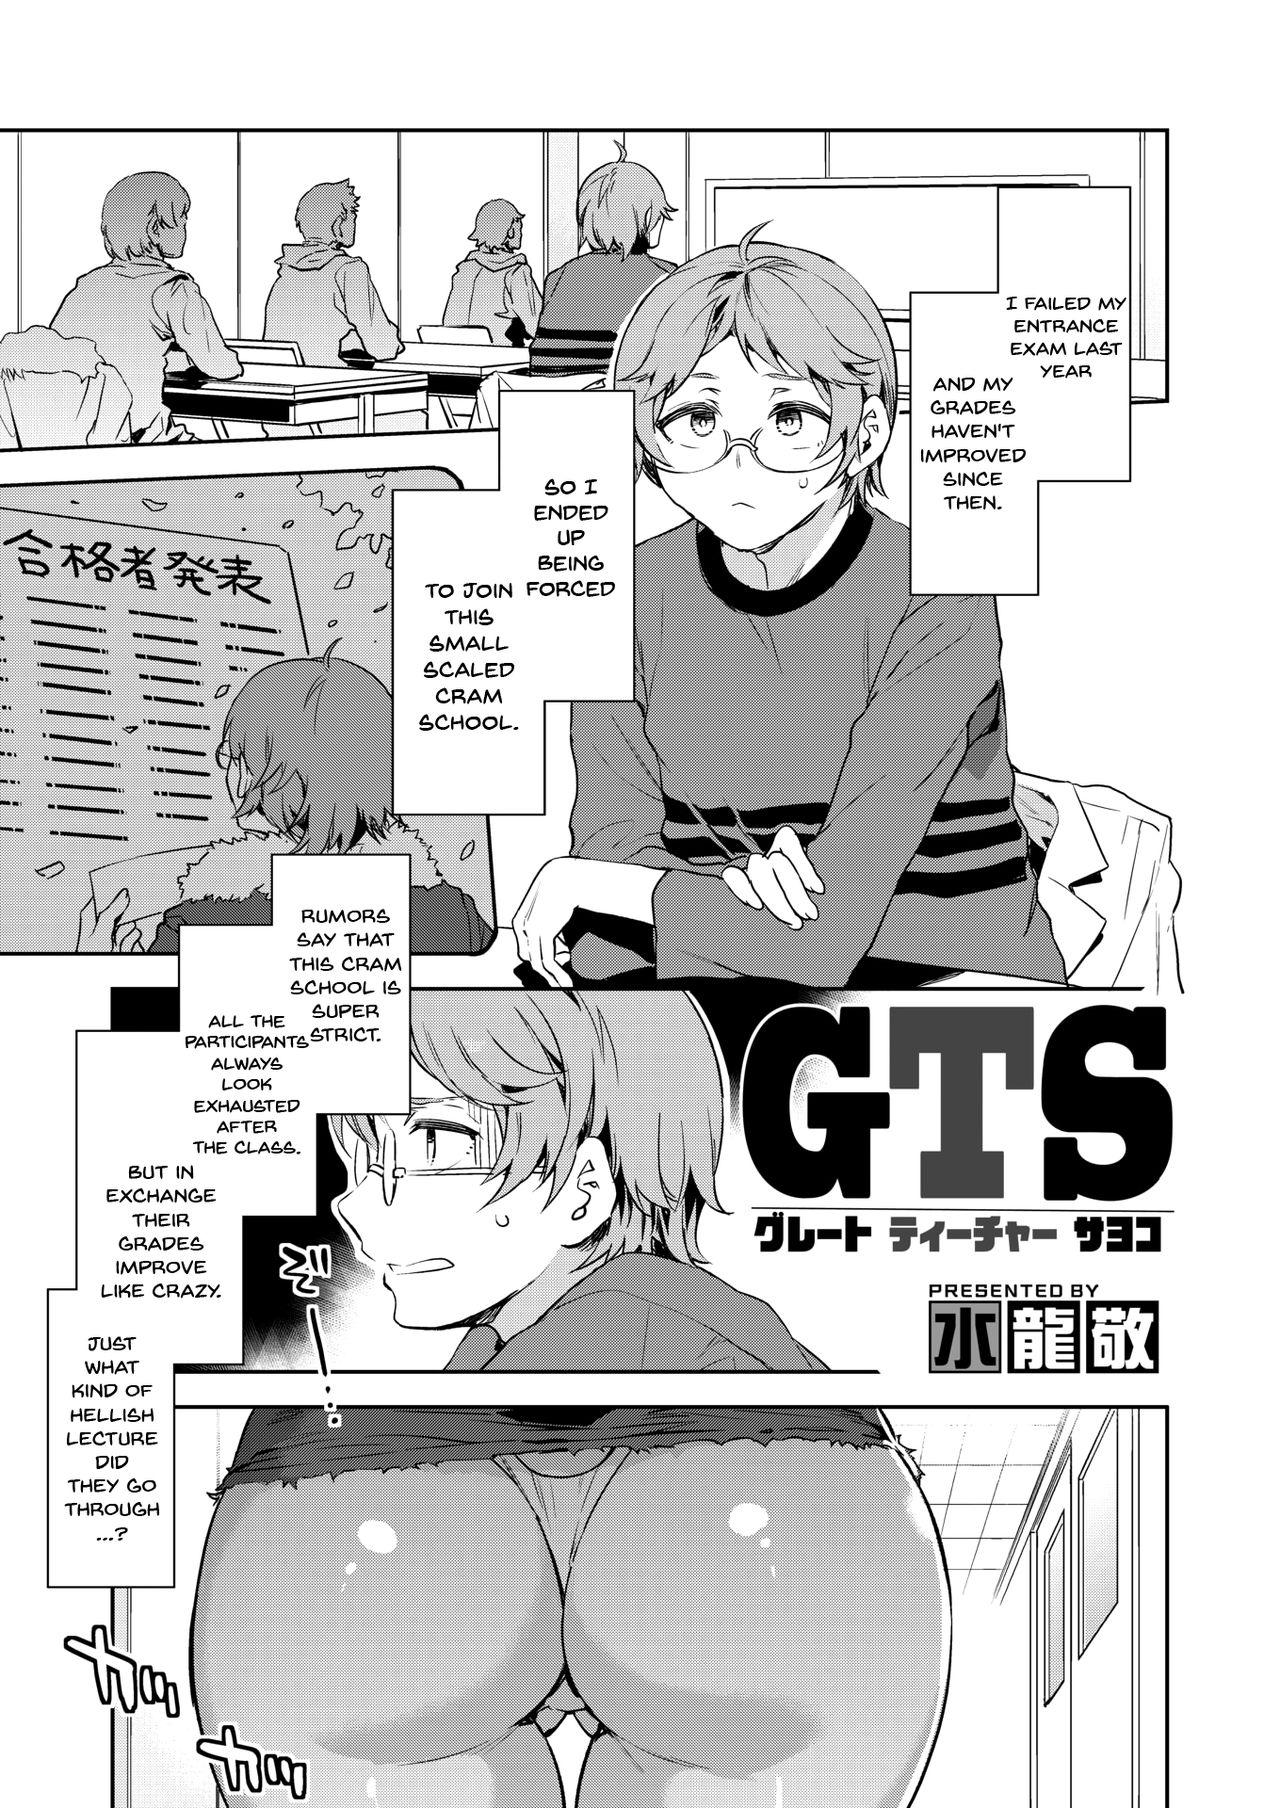 GTS | GTS - Great Teacher Sayoko 0